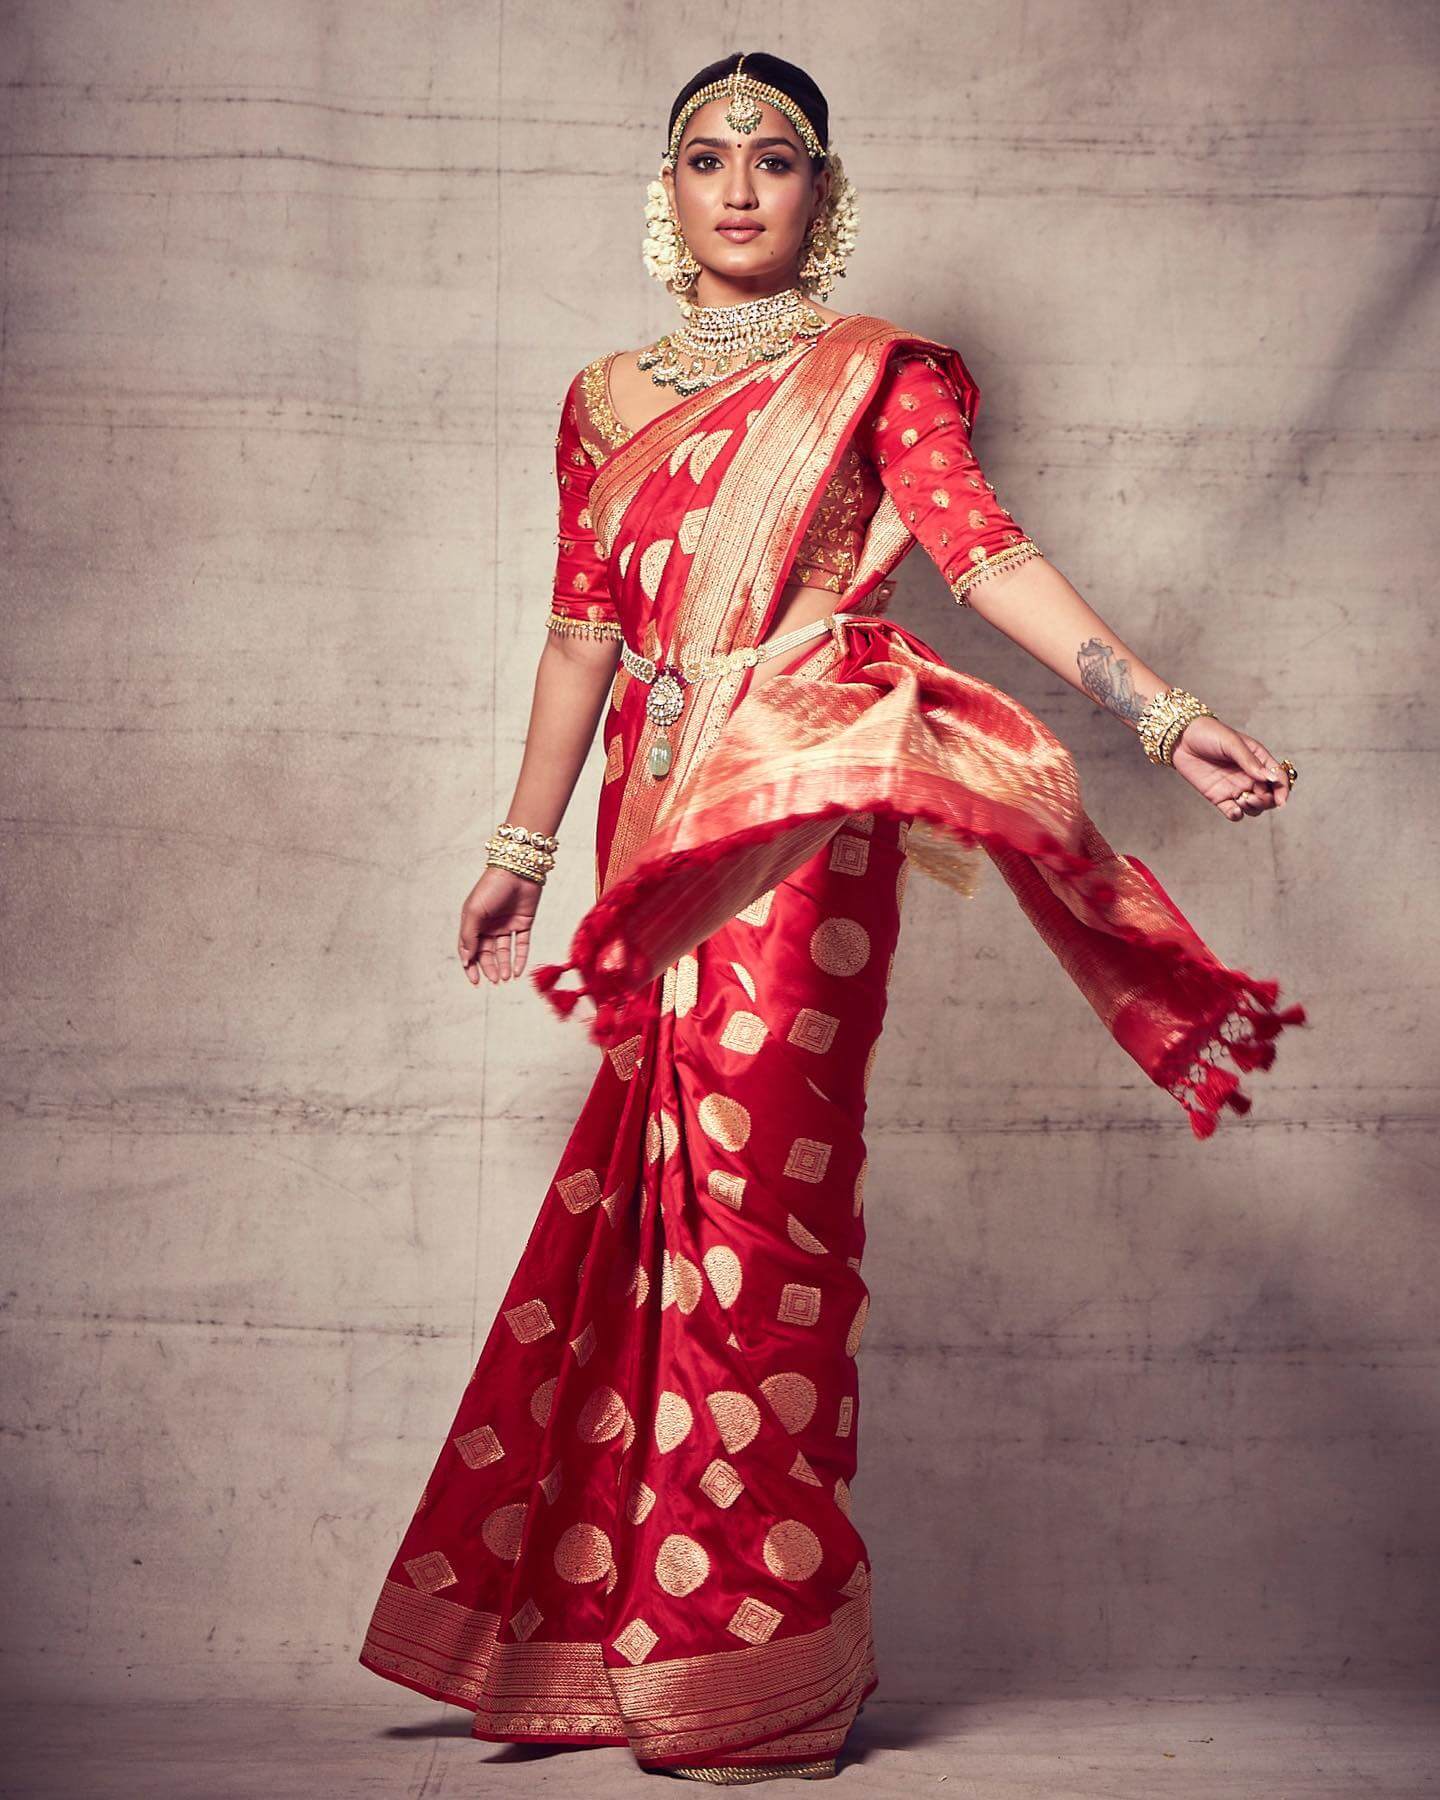 Saniya Iyappan Slaying The Bridal Look In Red Banarasi Silk Saree With Kundan Jewellery